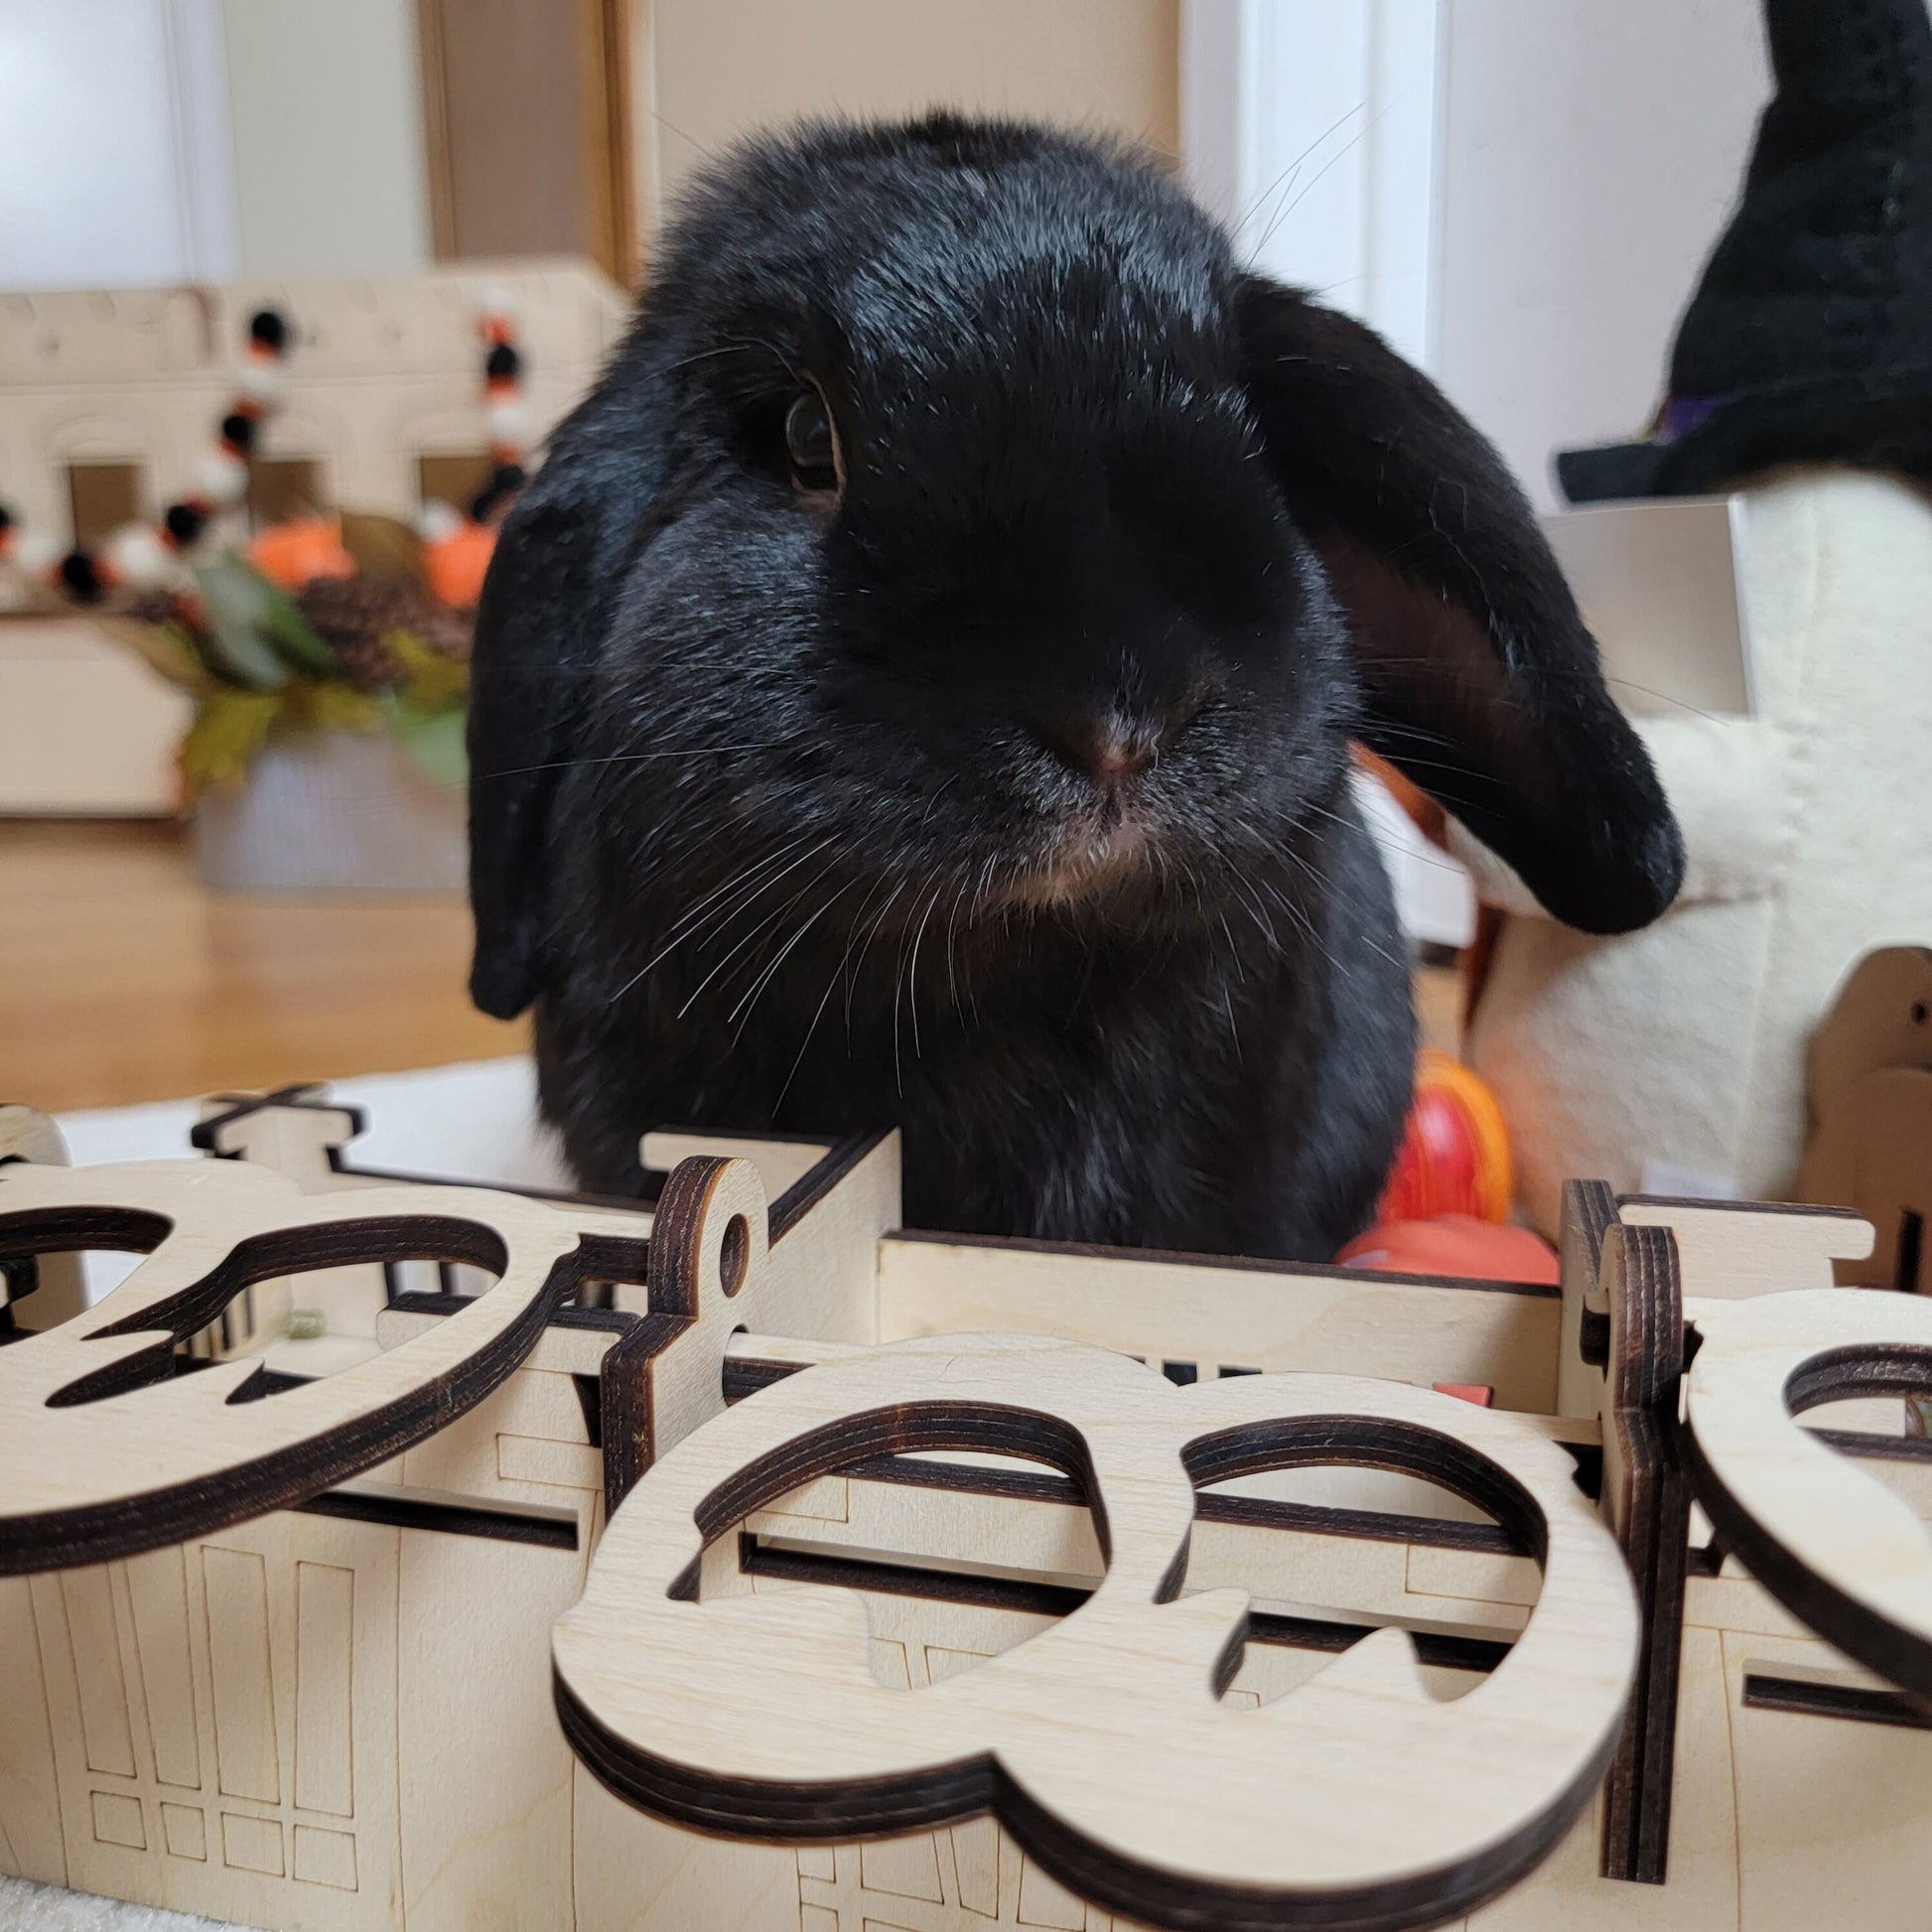 Rabbit Treat puzzle - Toy for rabbit - Rabbit Supply - Flop Bunny